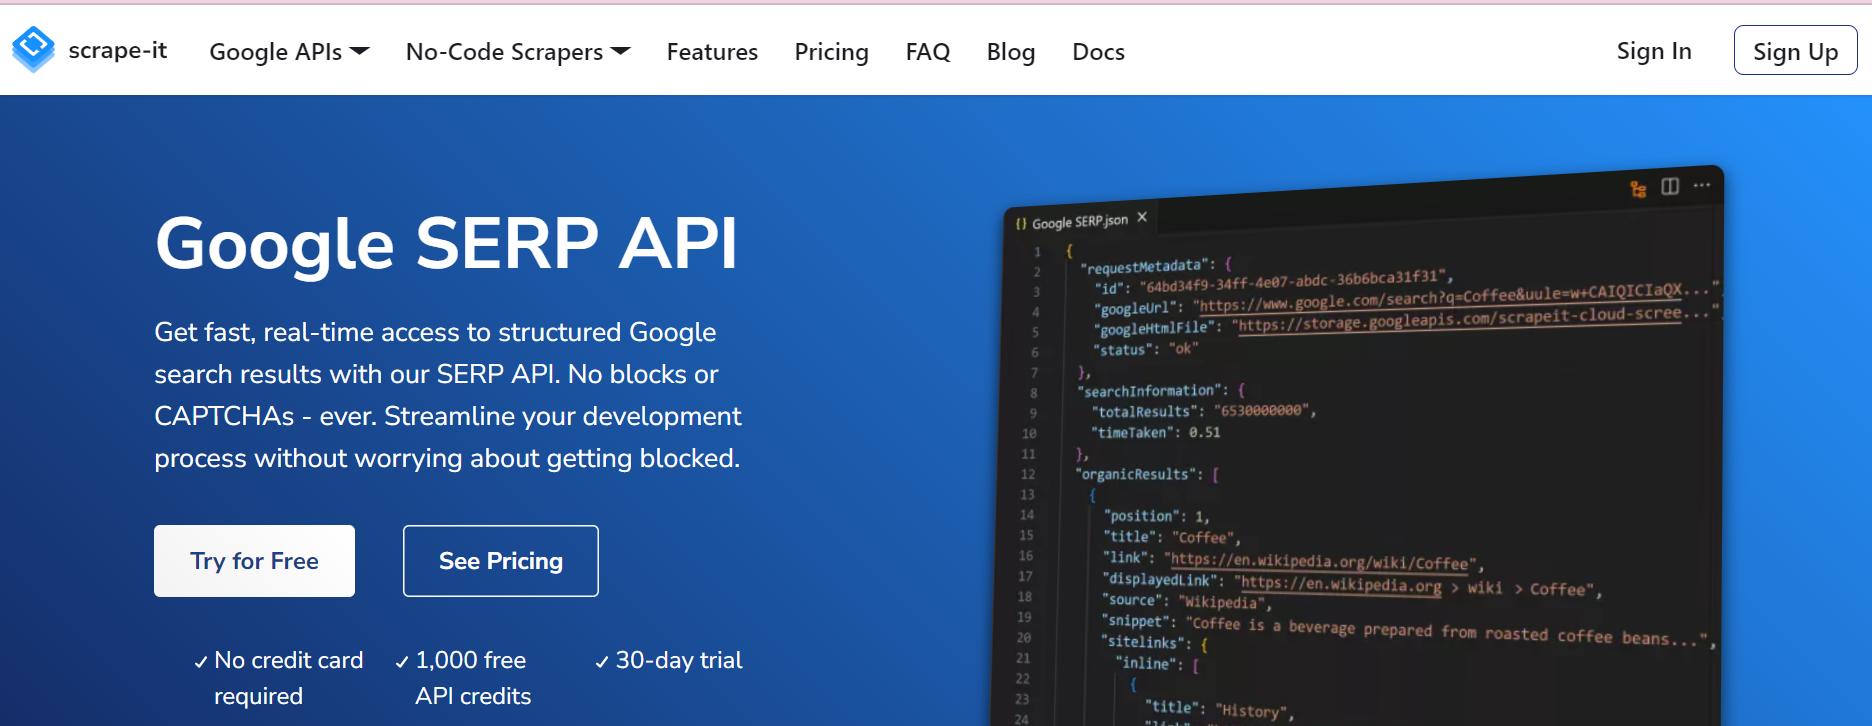 SCRAPE-IT.CLOUD'S SERP API